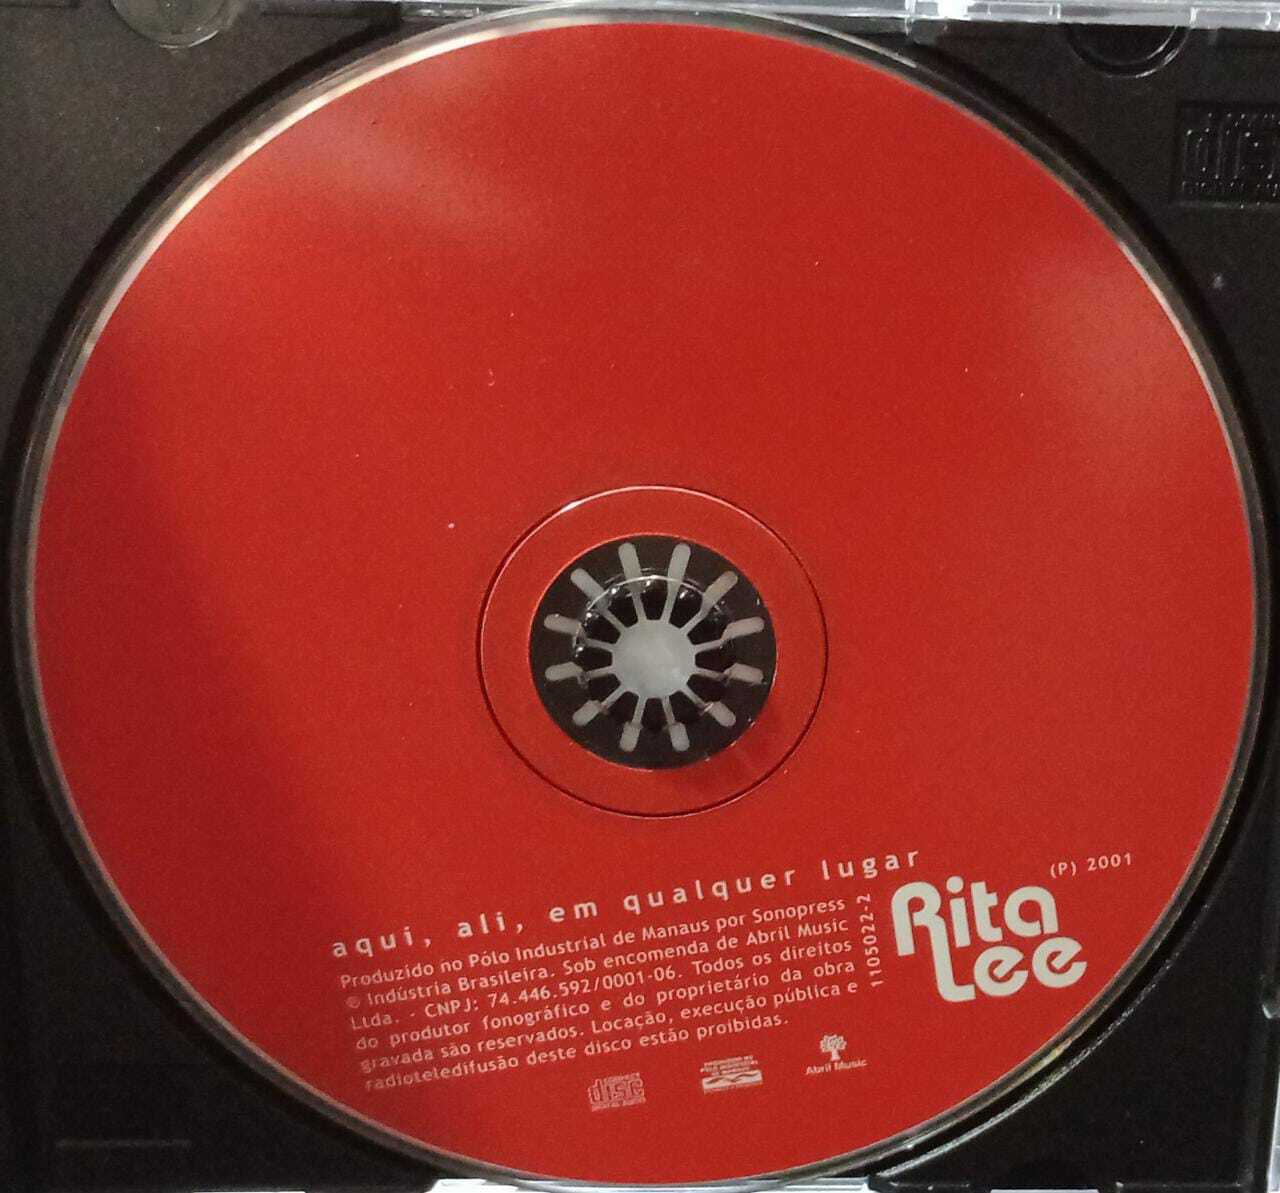 CD - Rita Lee - Aqui, Ali, Em Qualquer Lugar